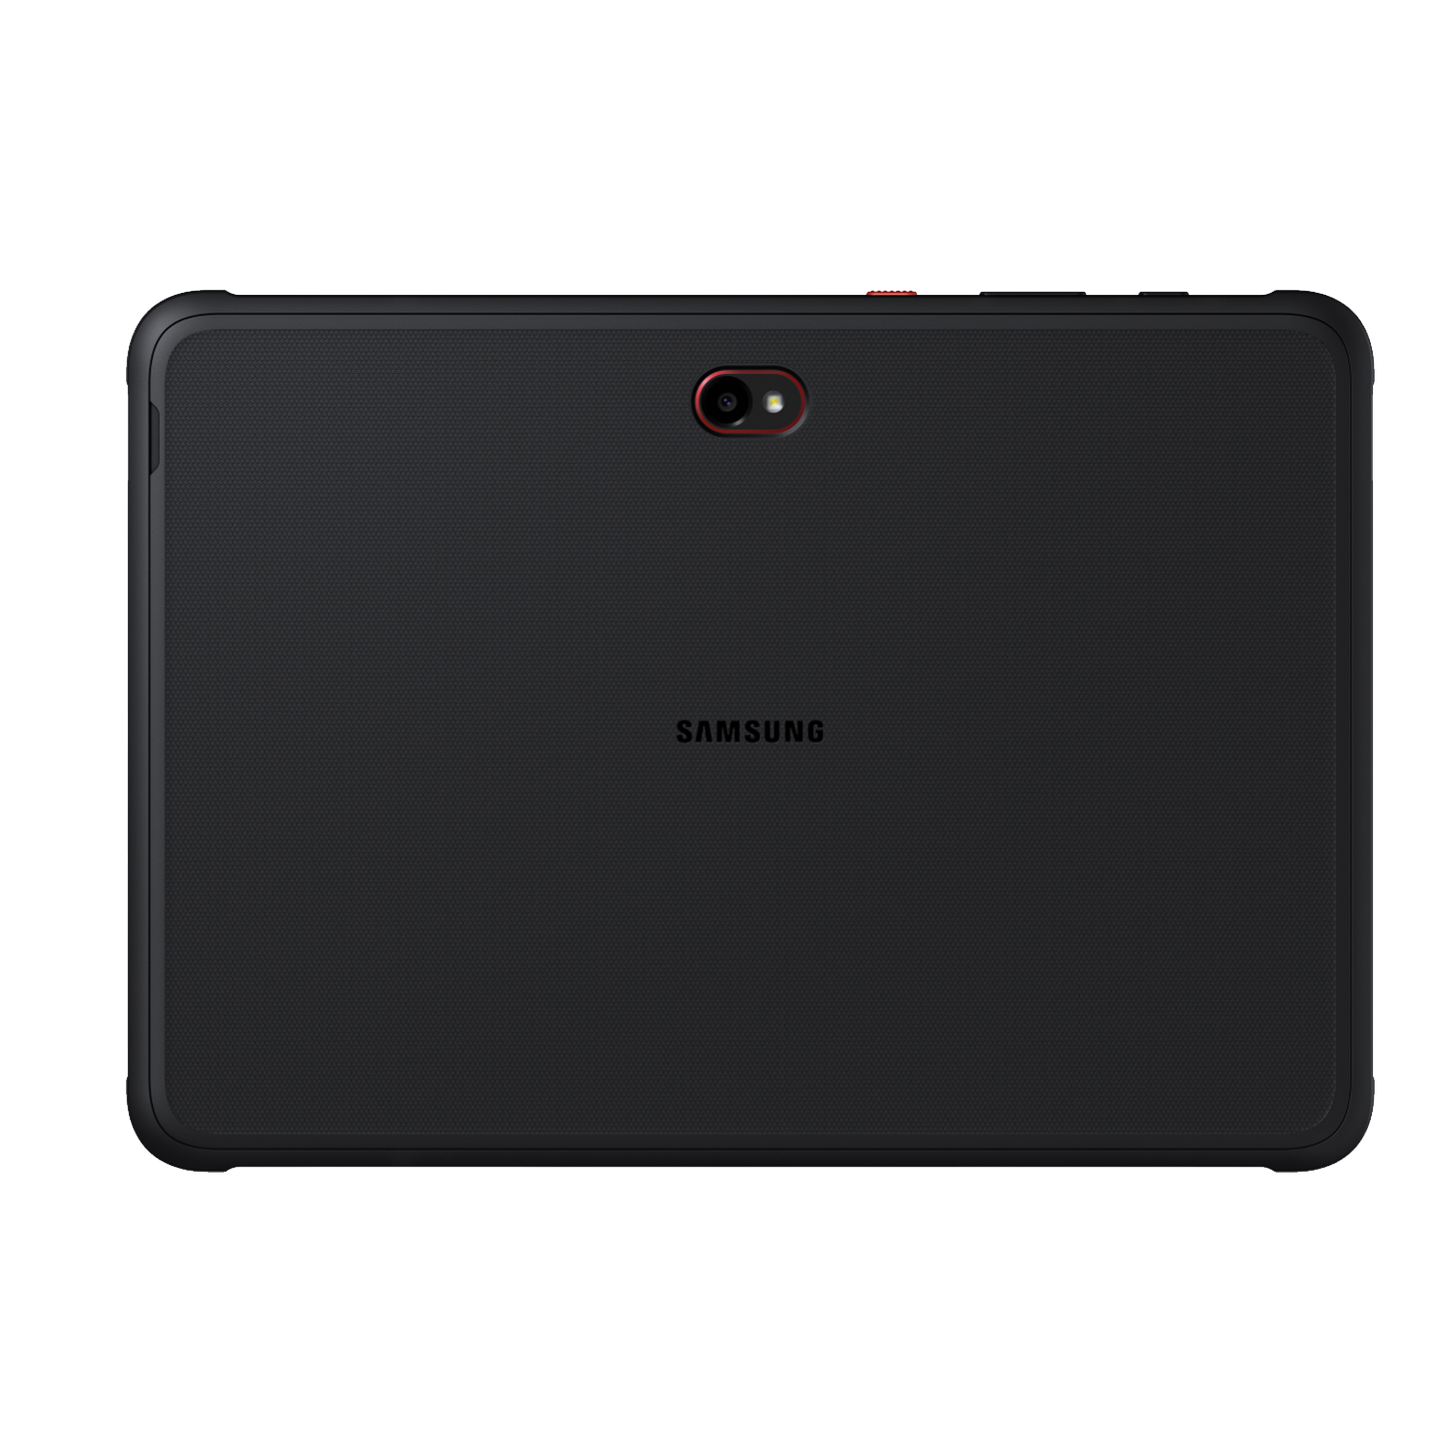 Samsung Galaxy Tab Active 4 Pro 5G